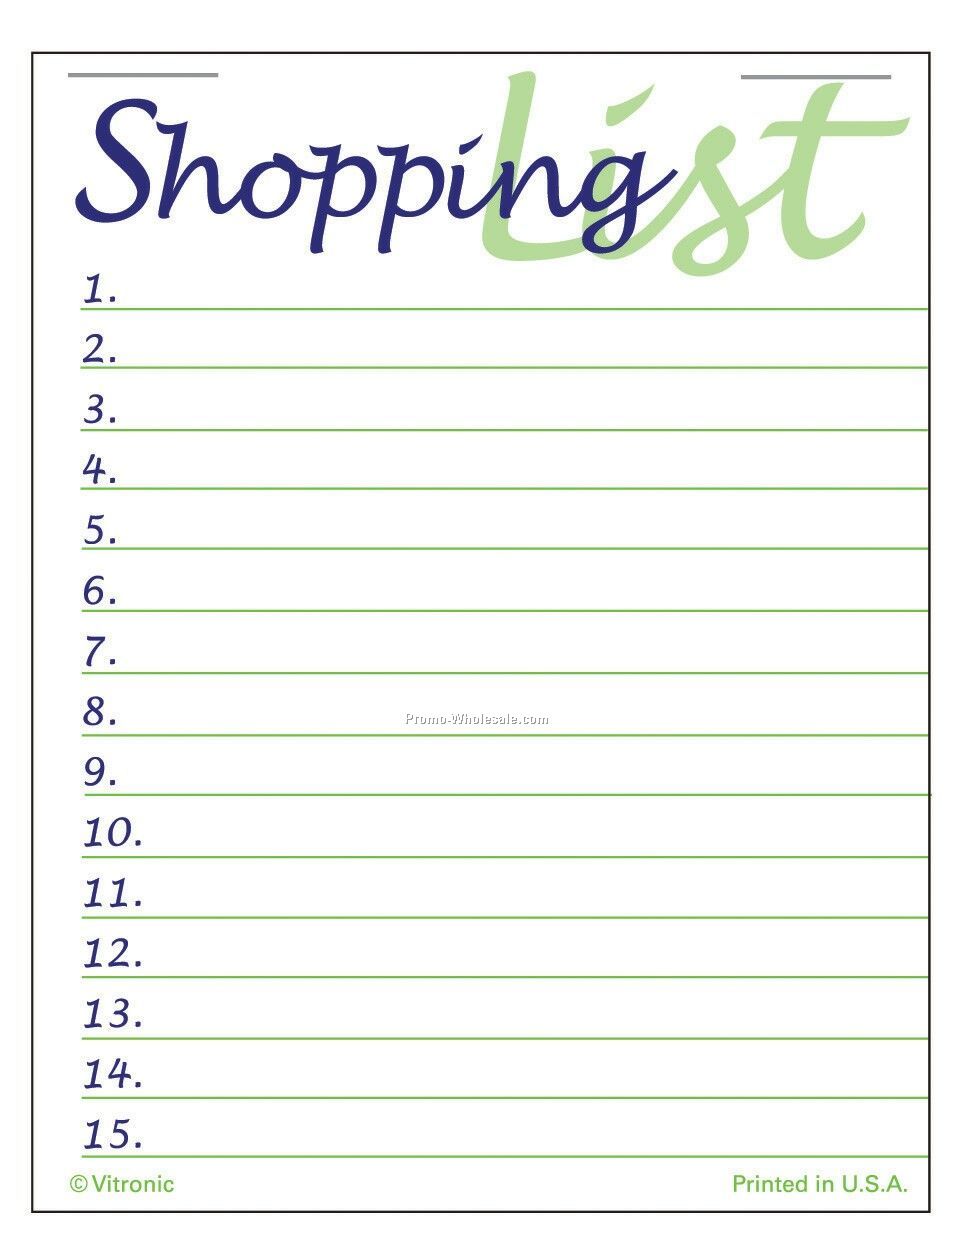 Shopping List Press-n-stick (Thru 8/1/09)